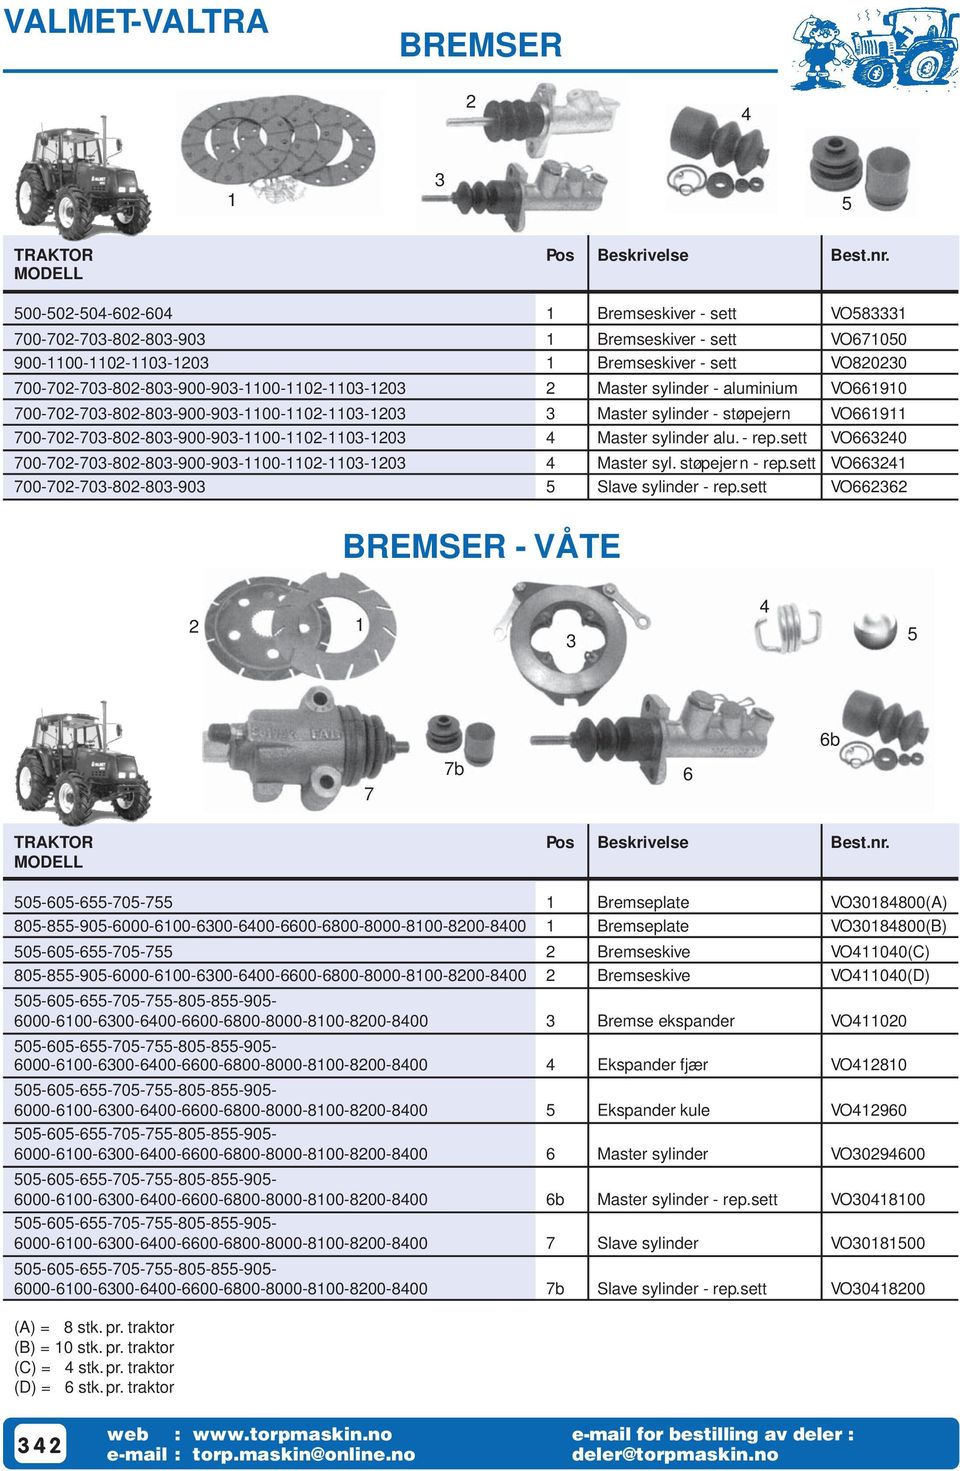 aluminium VO6690 700-70-703-80-803-900-903-00-0-03-03 3 Master sylinder - støpejern VO669 700-70-703-80-803-900-903-00-0-03-03 4 Master sylinder alu. - rep.